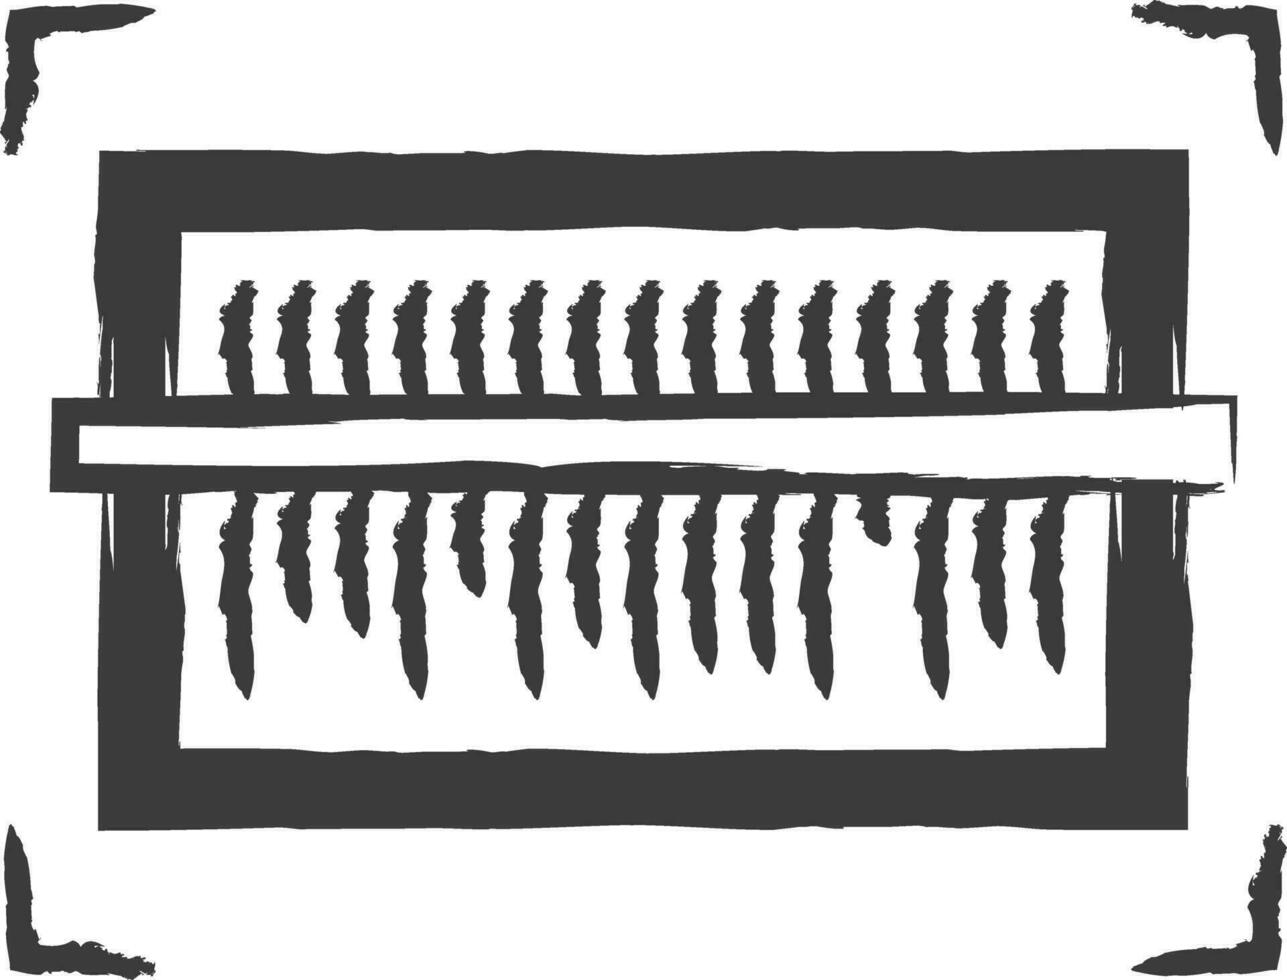 Barcode hand drawn vector illustration